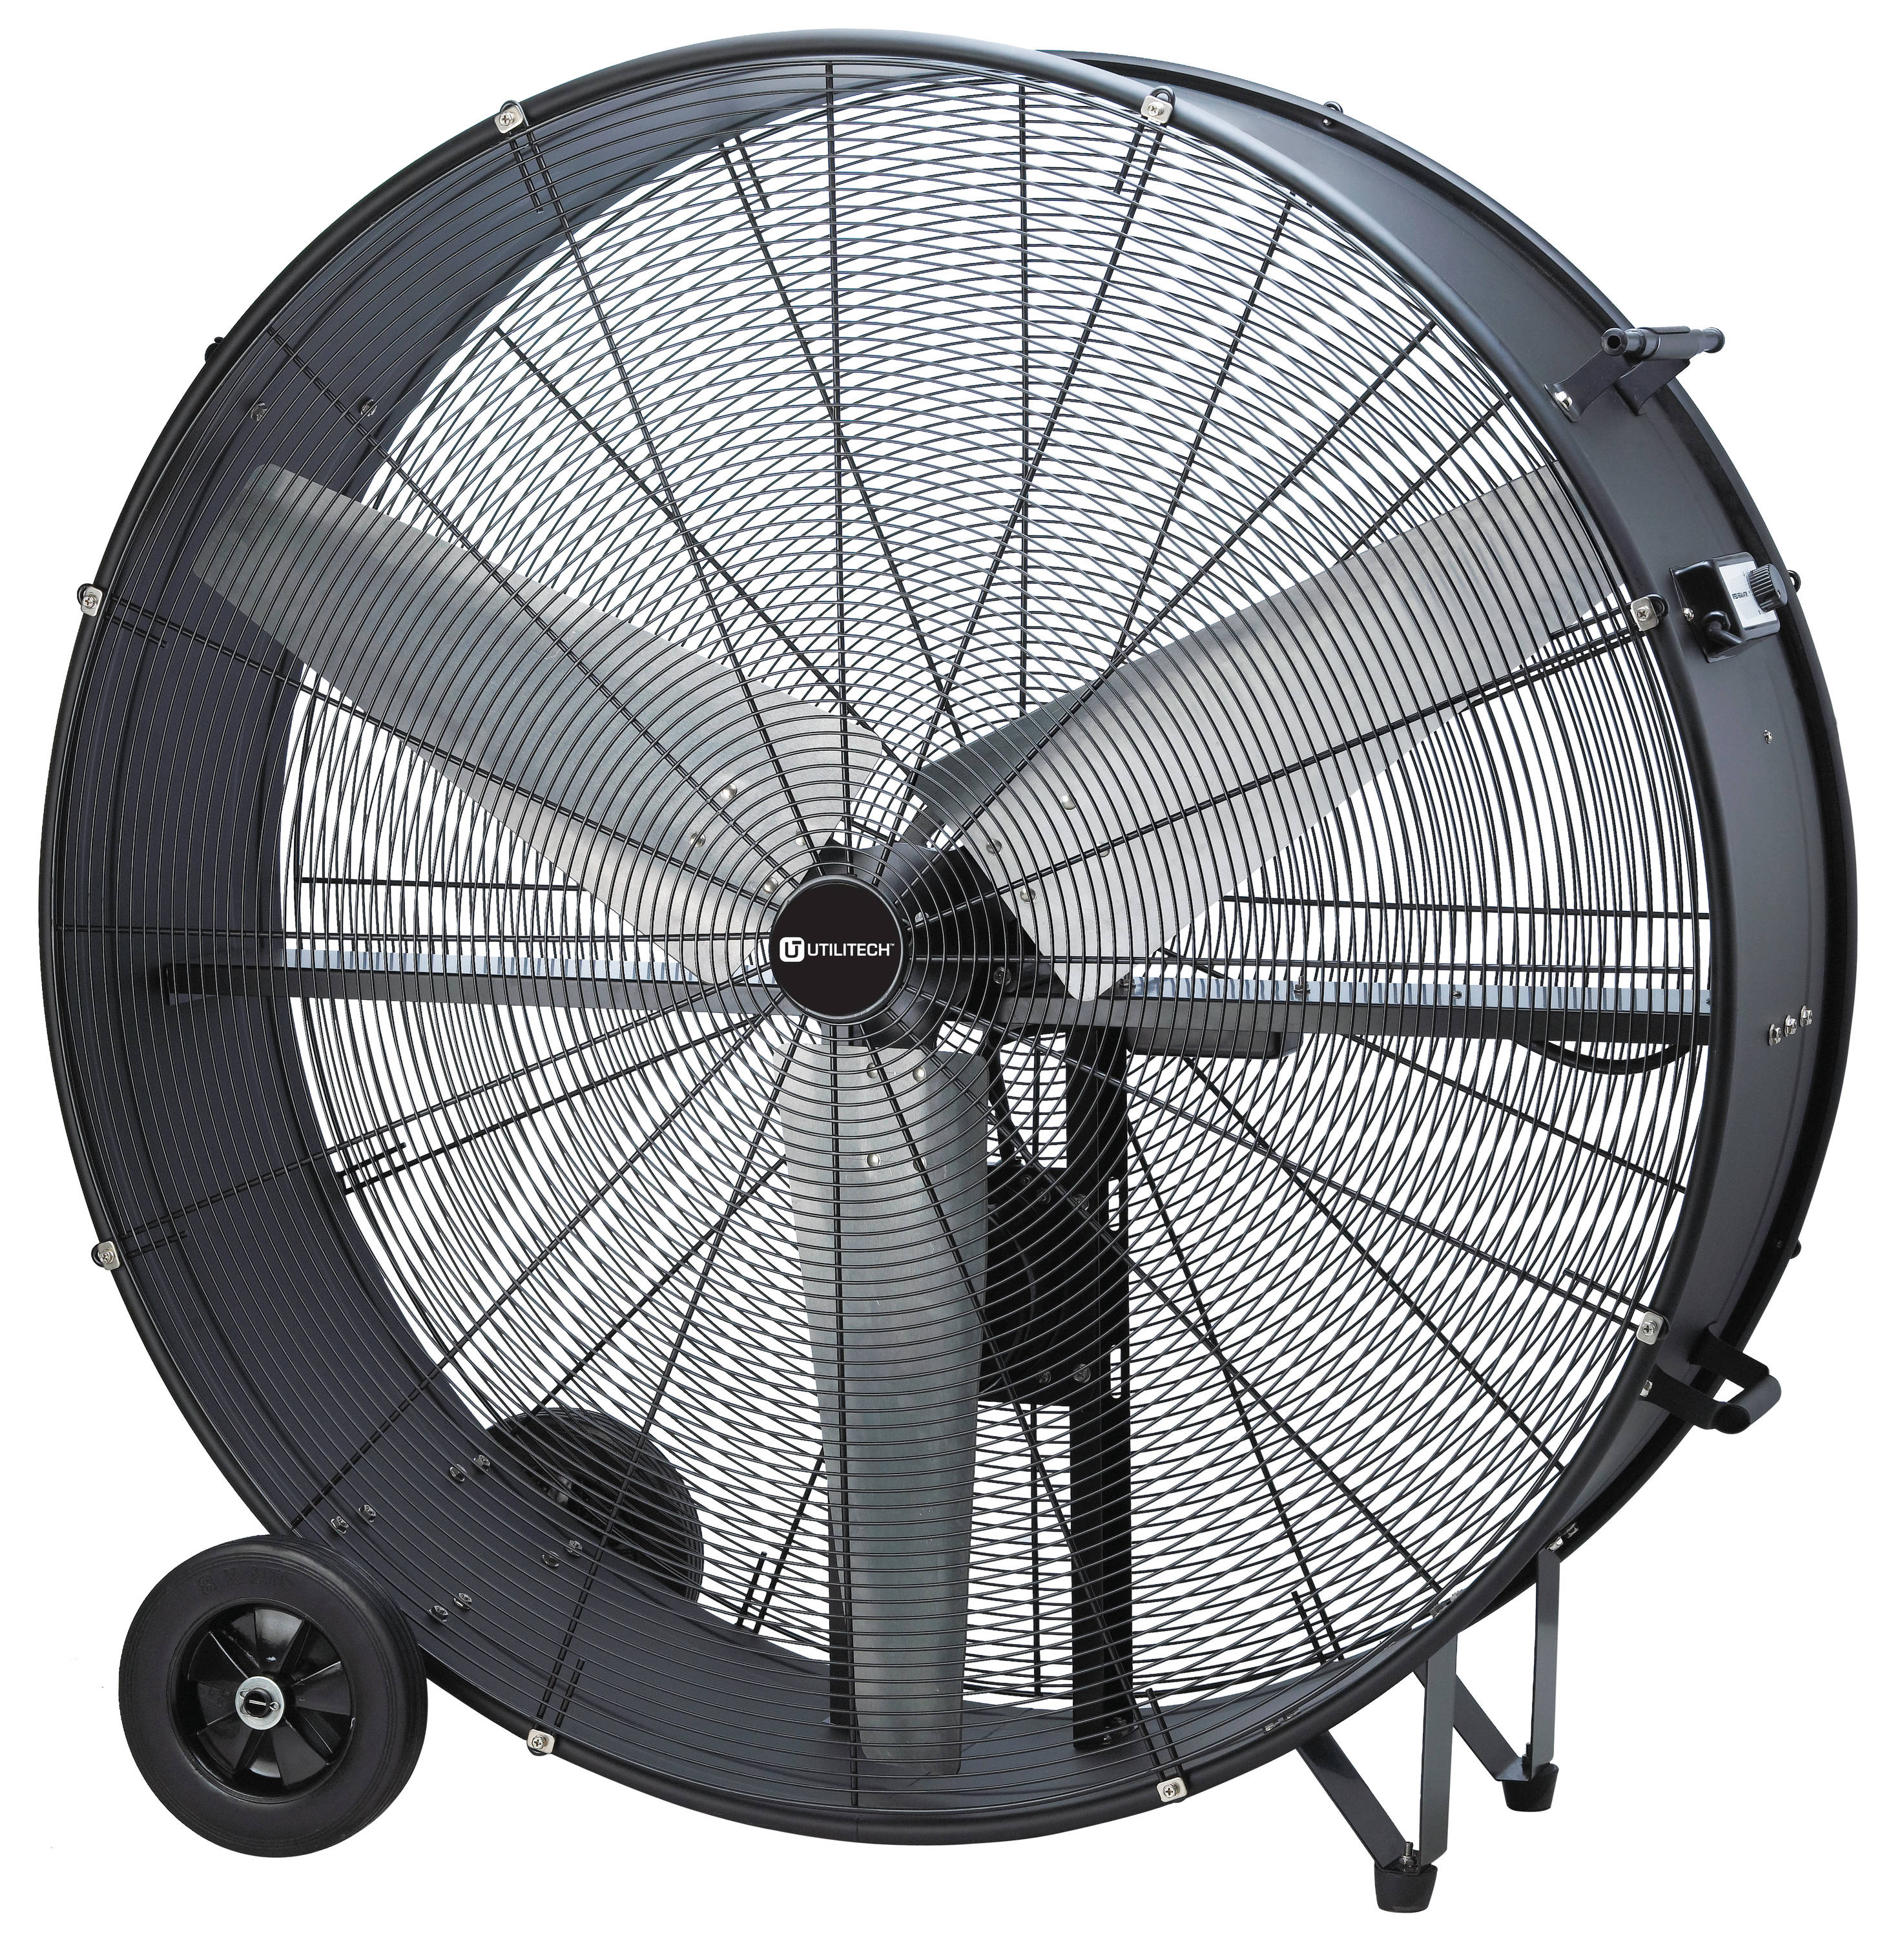 Q Standard 30 Industrial Direct Drive Drum Fan 10380 for sale online 